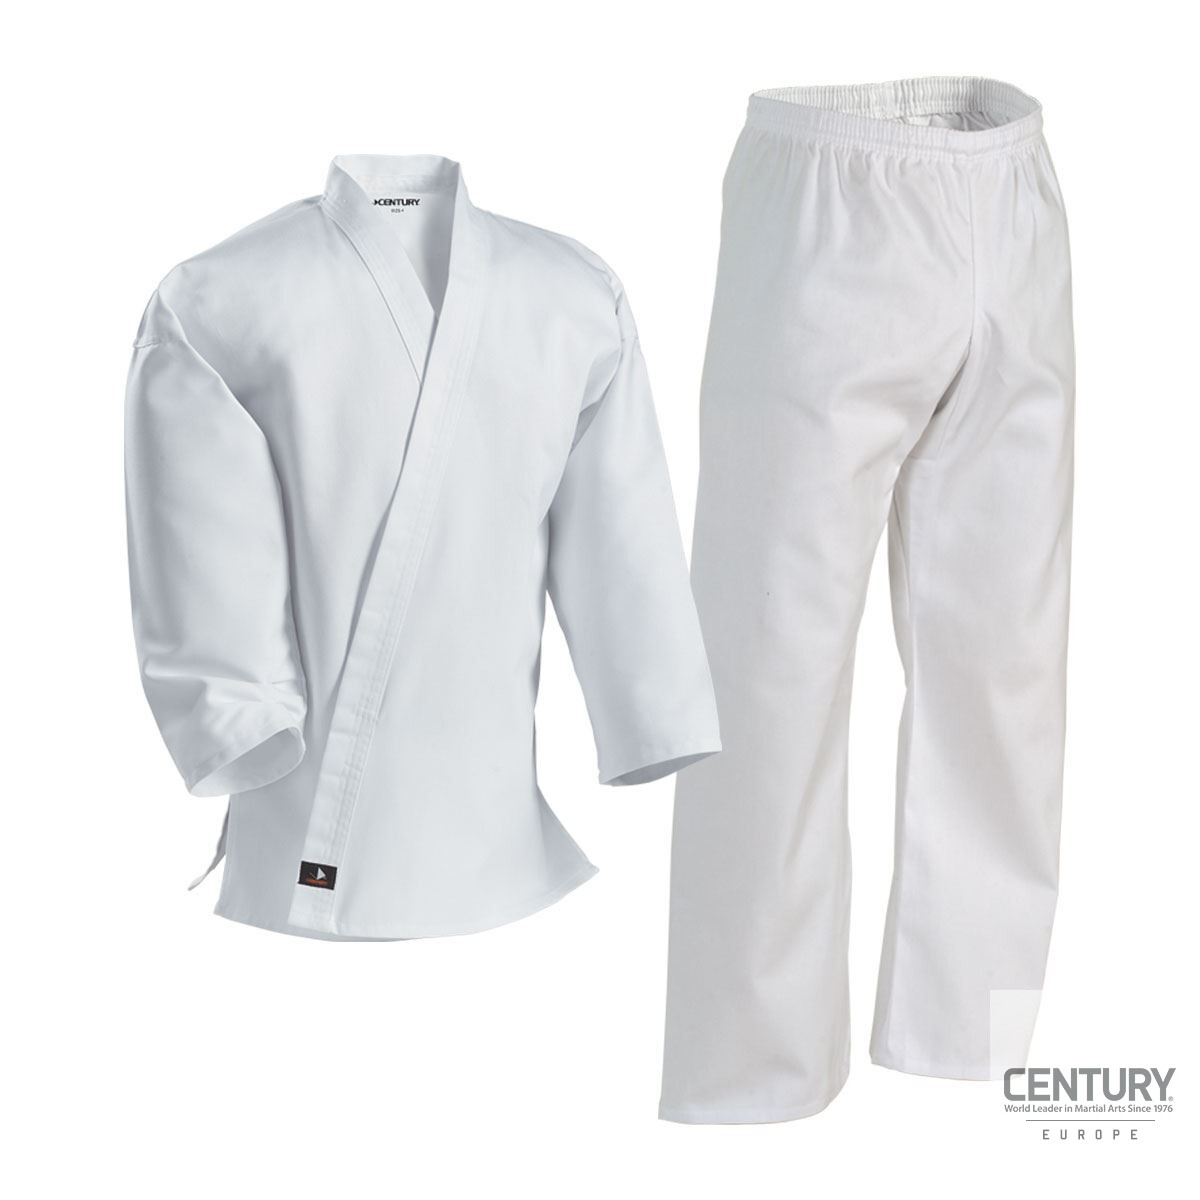 Lightweight Student Uniform 6 oz White [00] 104 - 117 cm